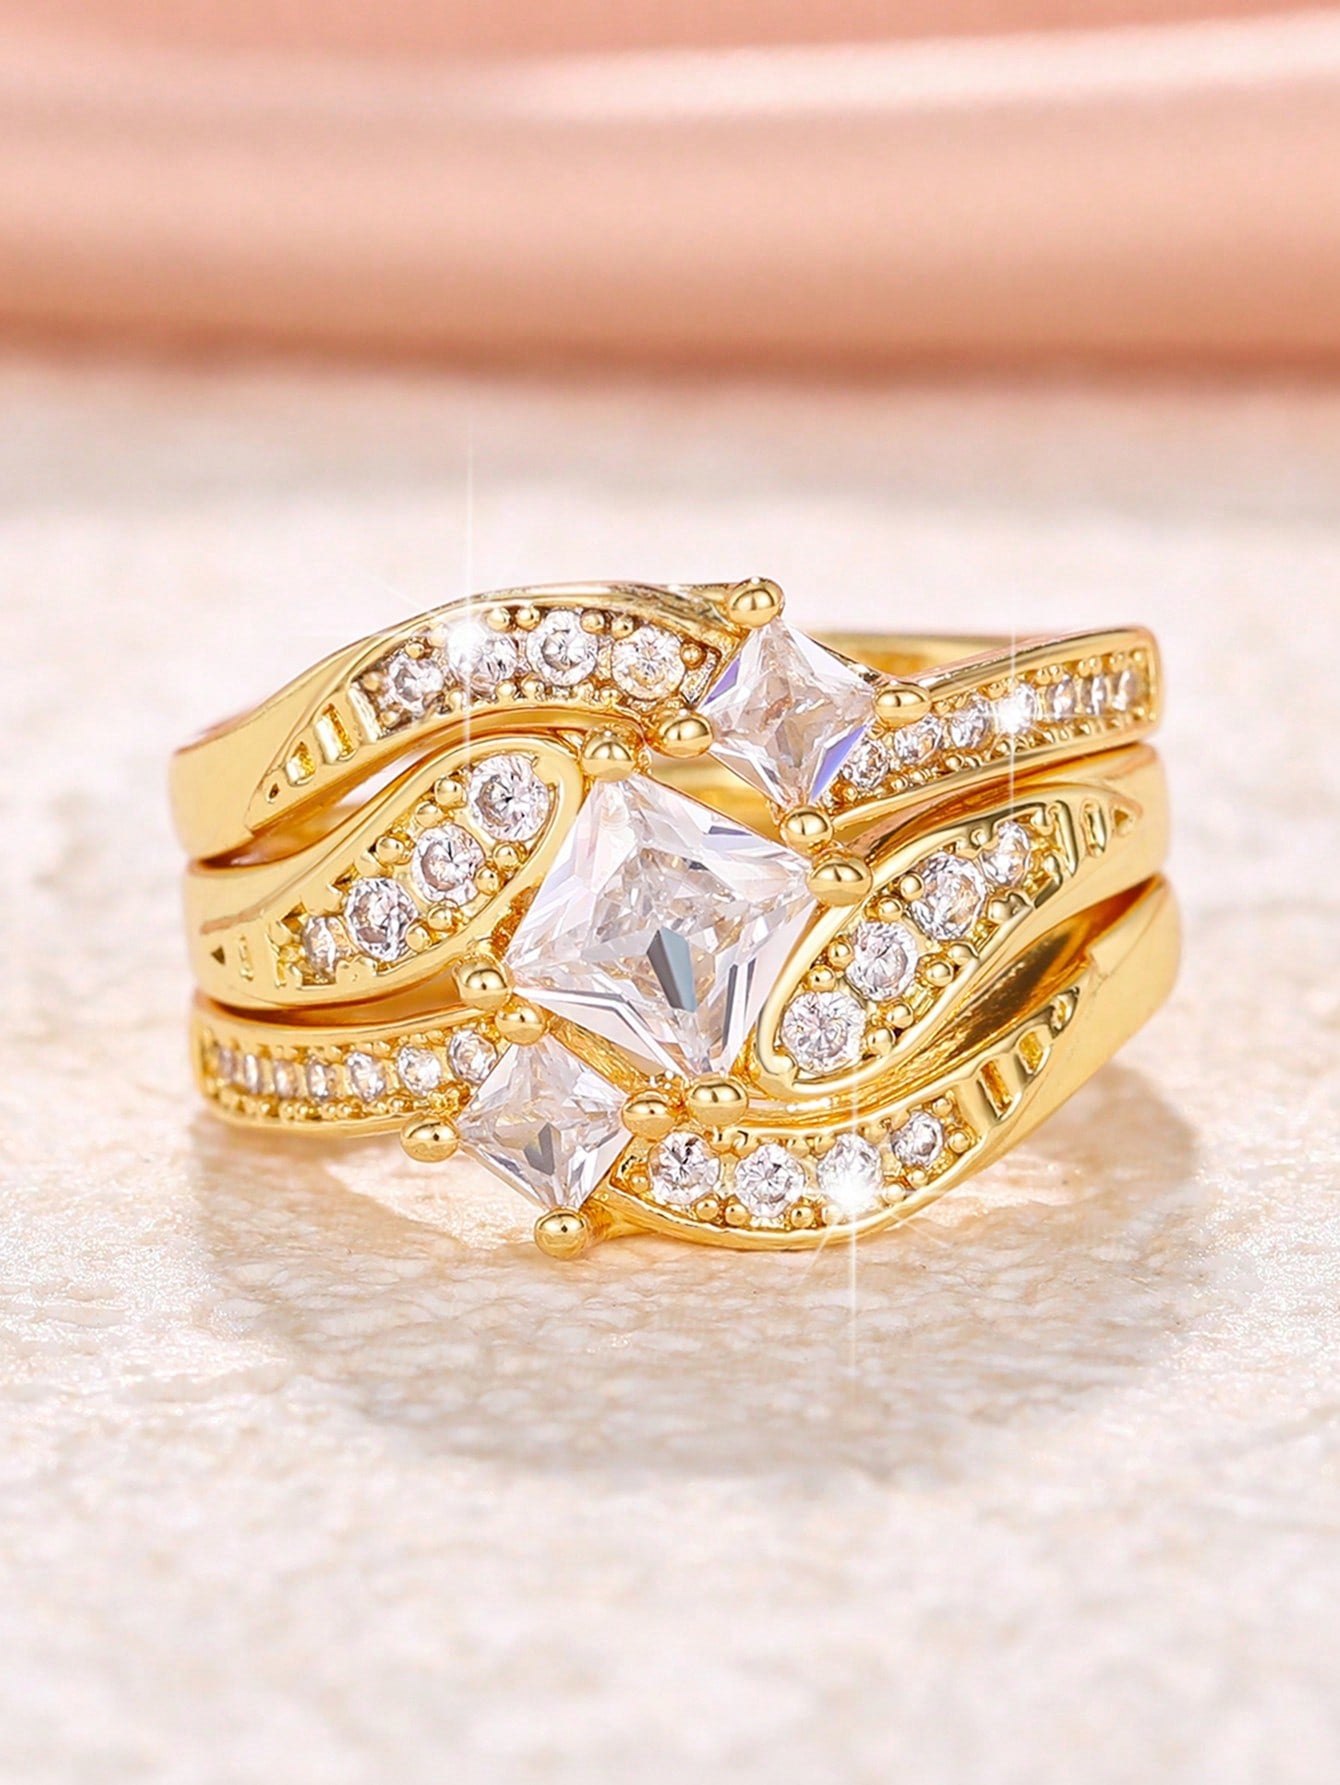 3pcs/set Women Glamorous Cubic Zirconia Decor Ring For Women For Gift